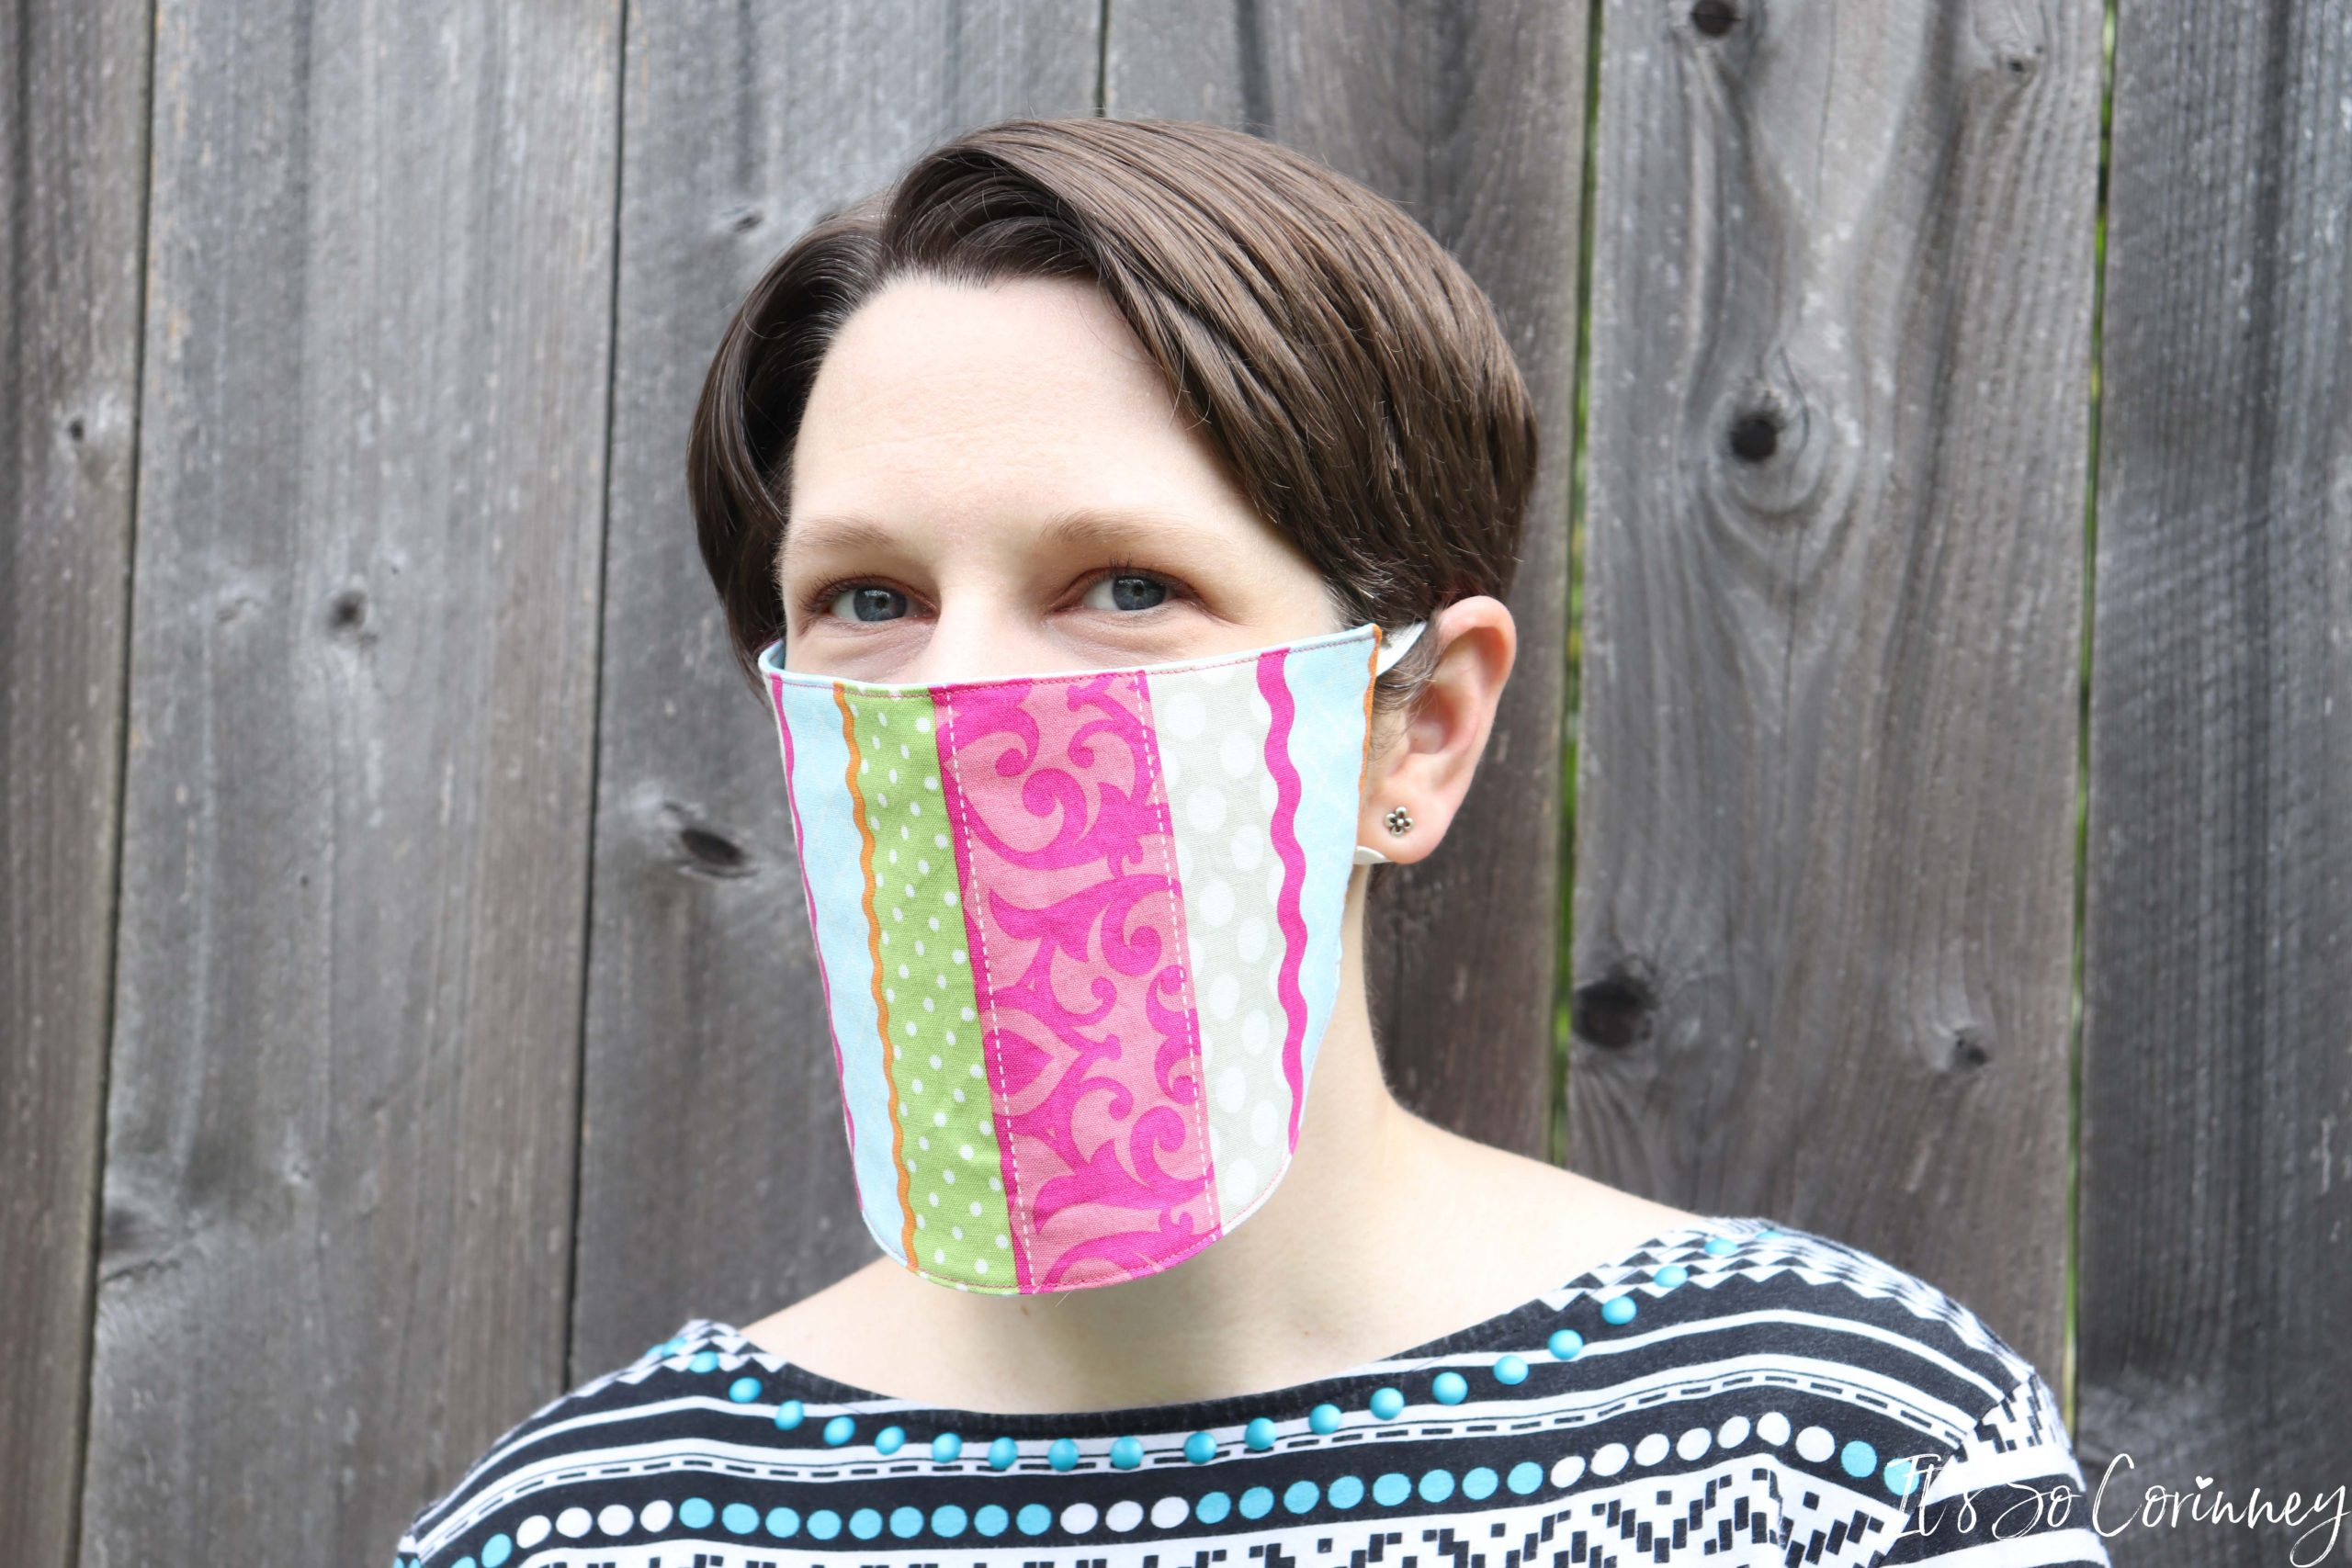 DIY Veil Face Mask Sewing Pattern